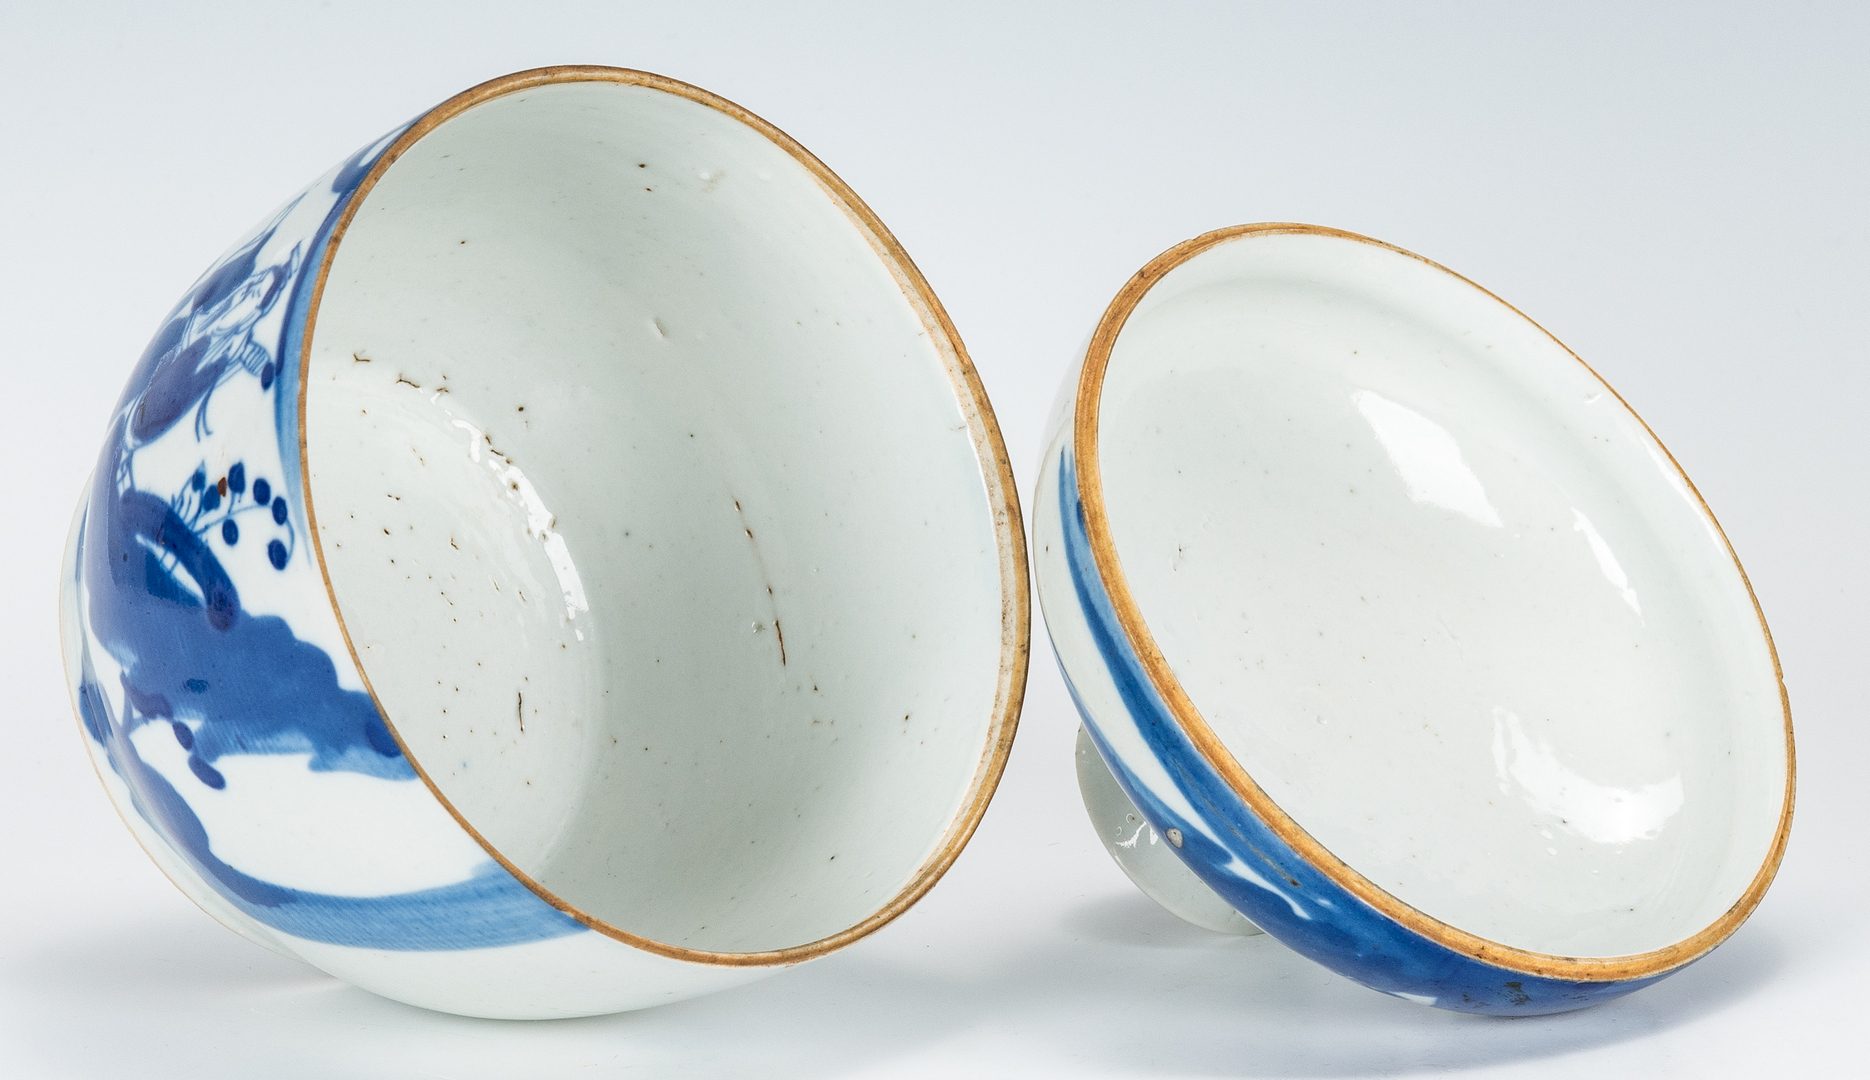 Lot 475: 10 Pcs. Chinese Export Blue & White Porcelain